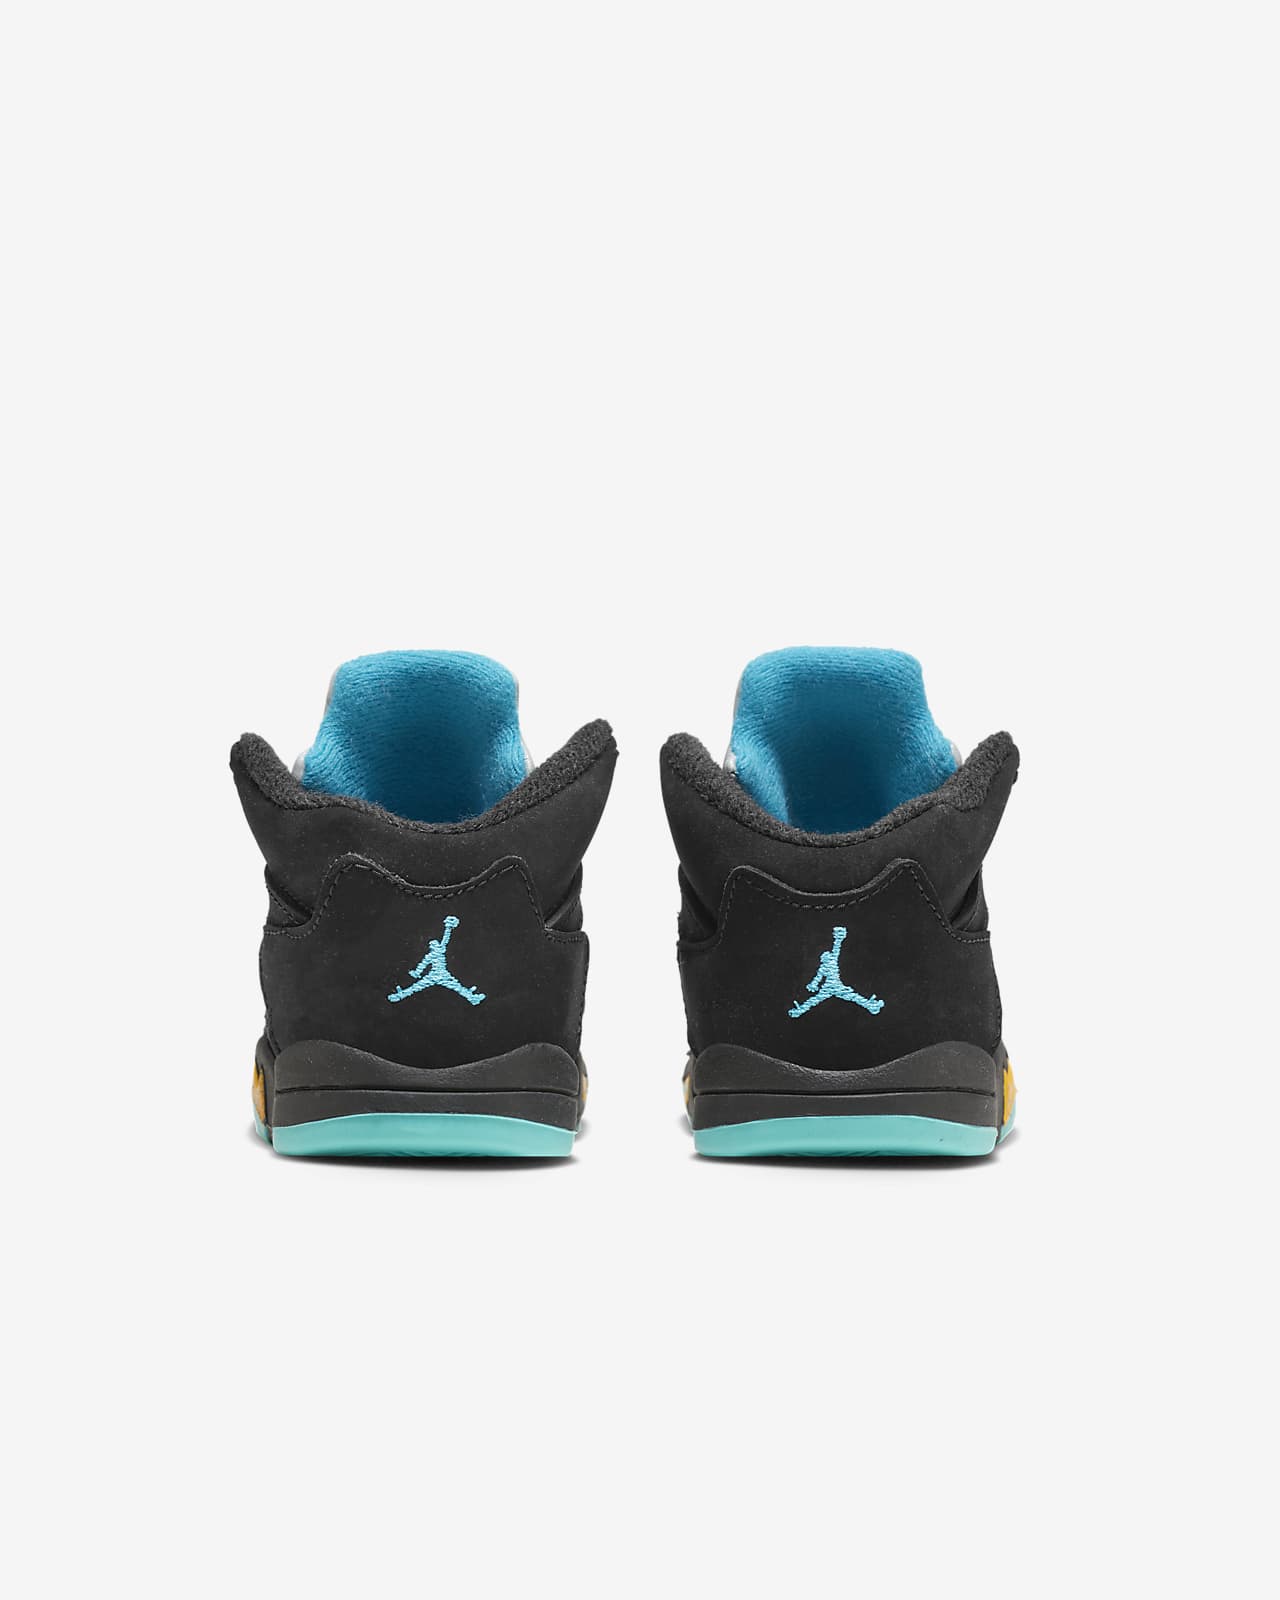 Jordan 5 Retro Infant/Toddler Shoe 